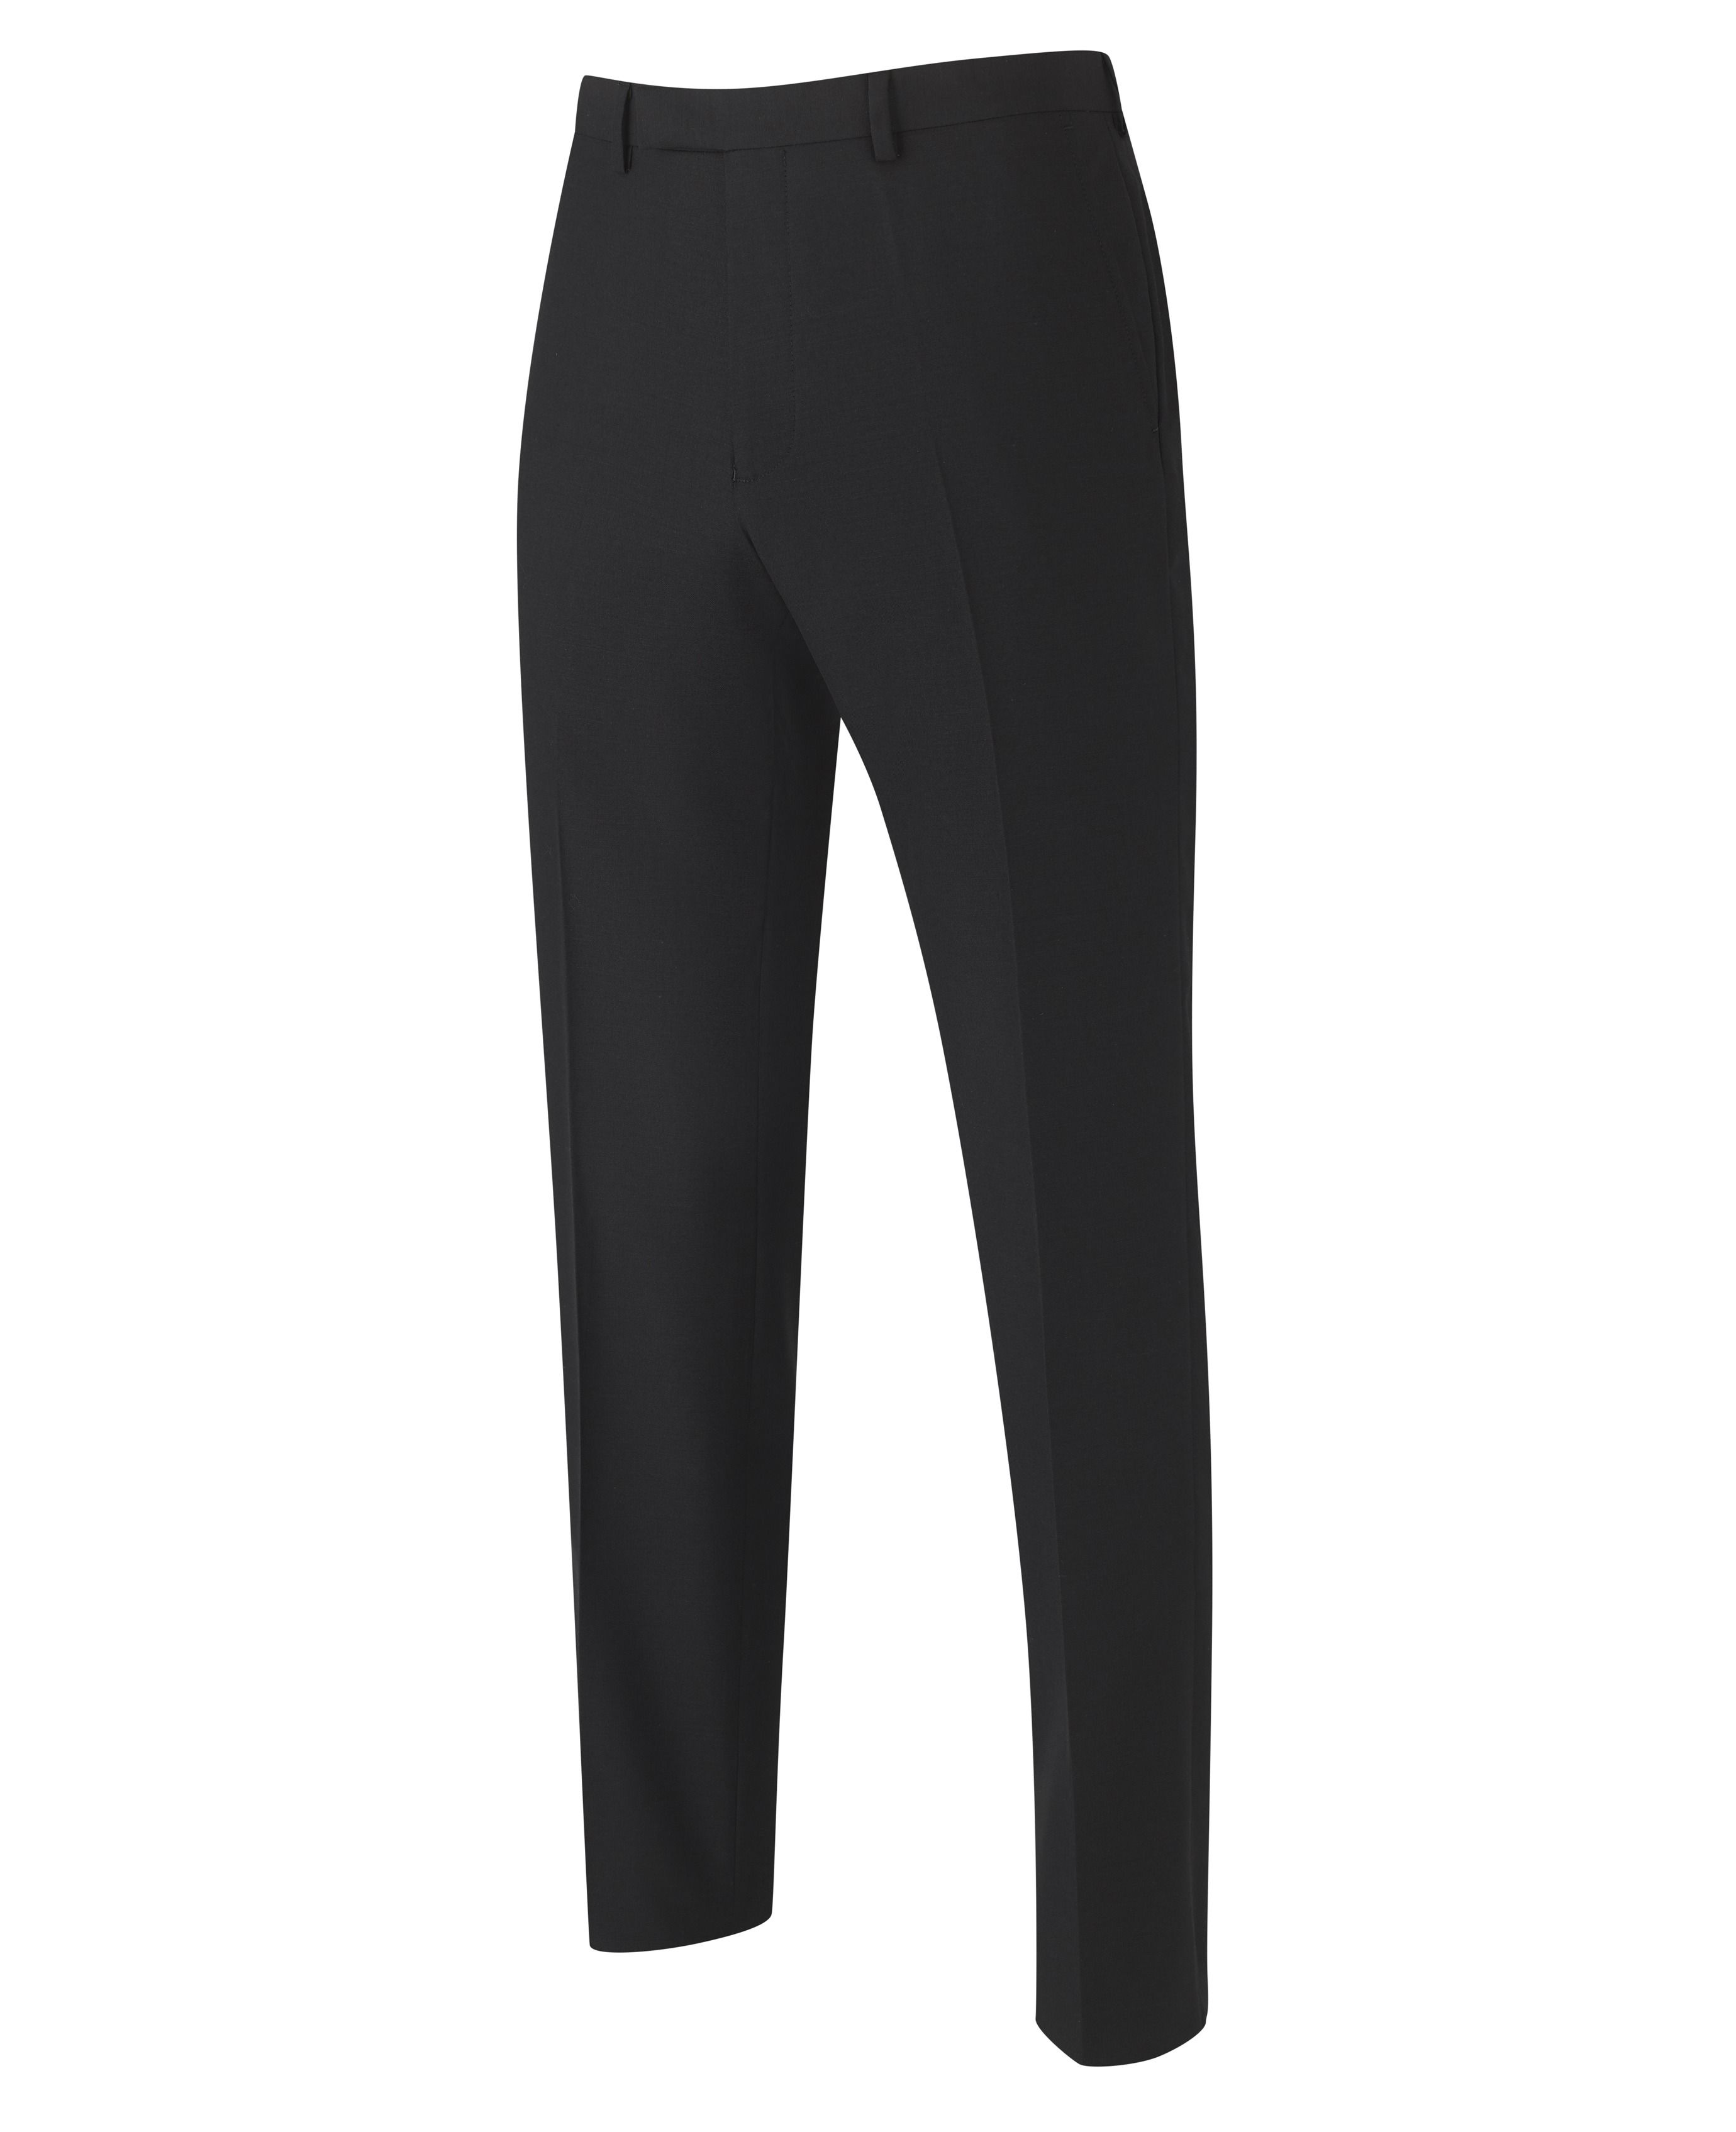 softshell fabric fitted trousers - black - Yves Salomon – Yves Salomon US